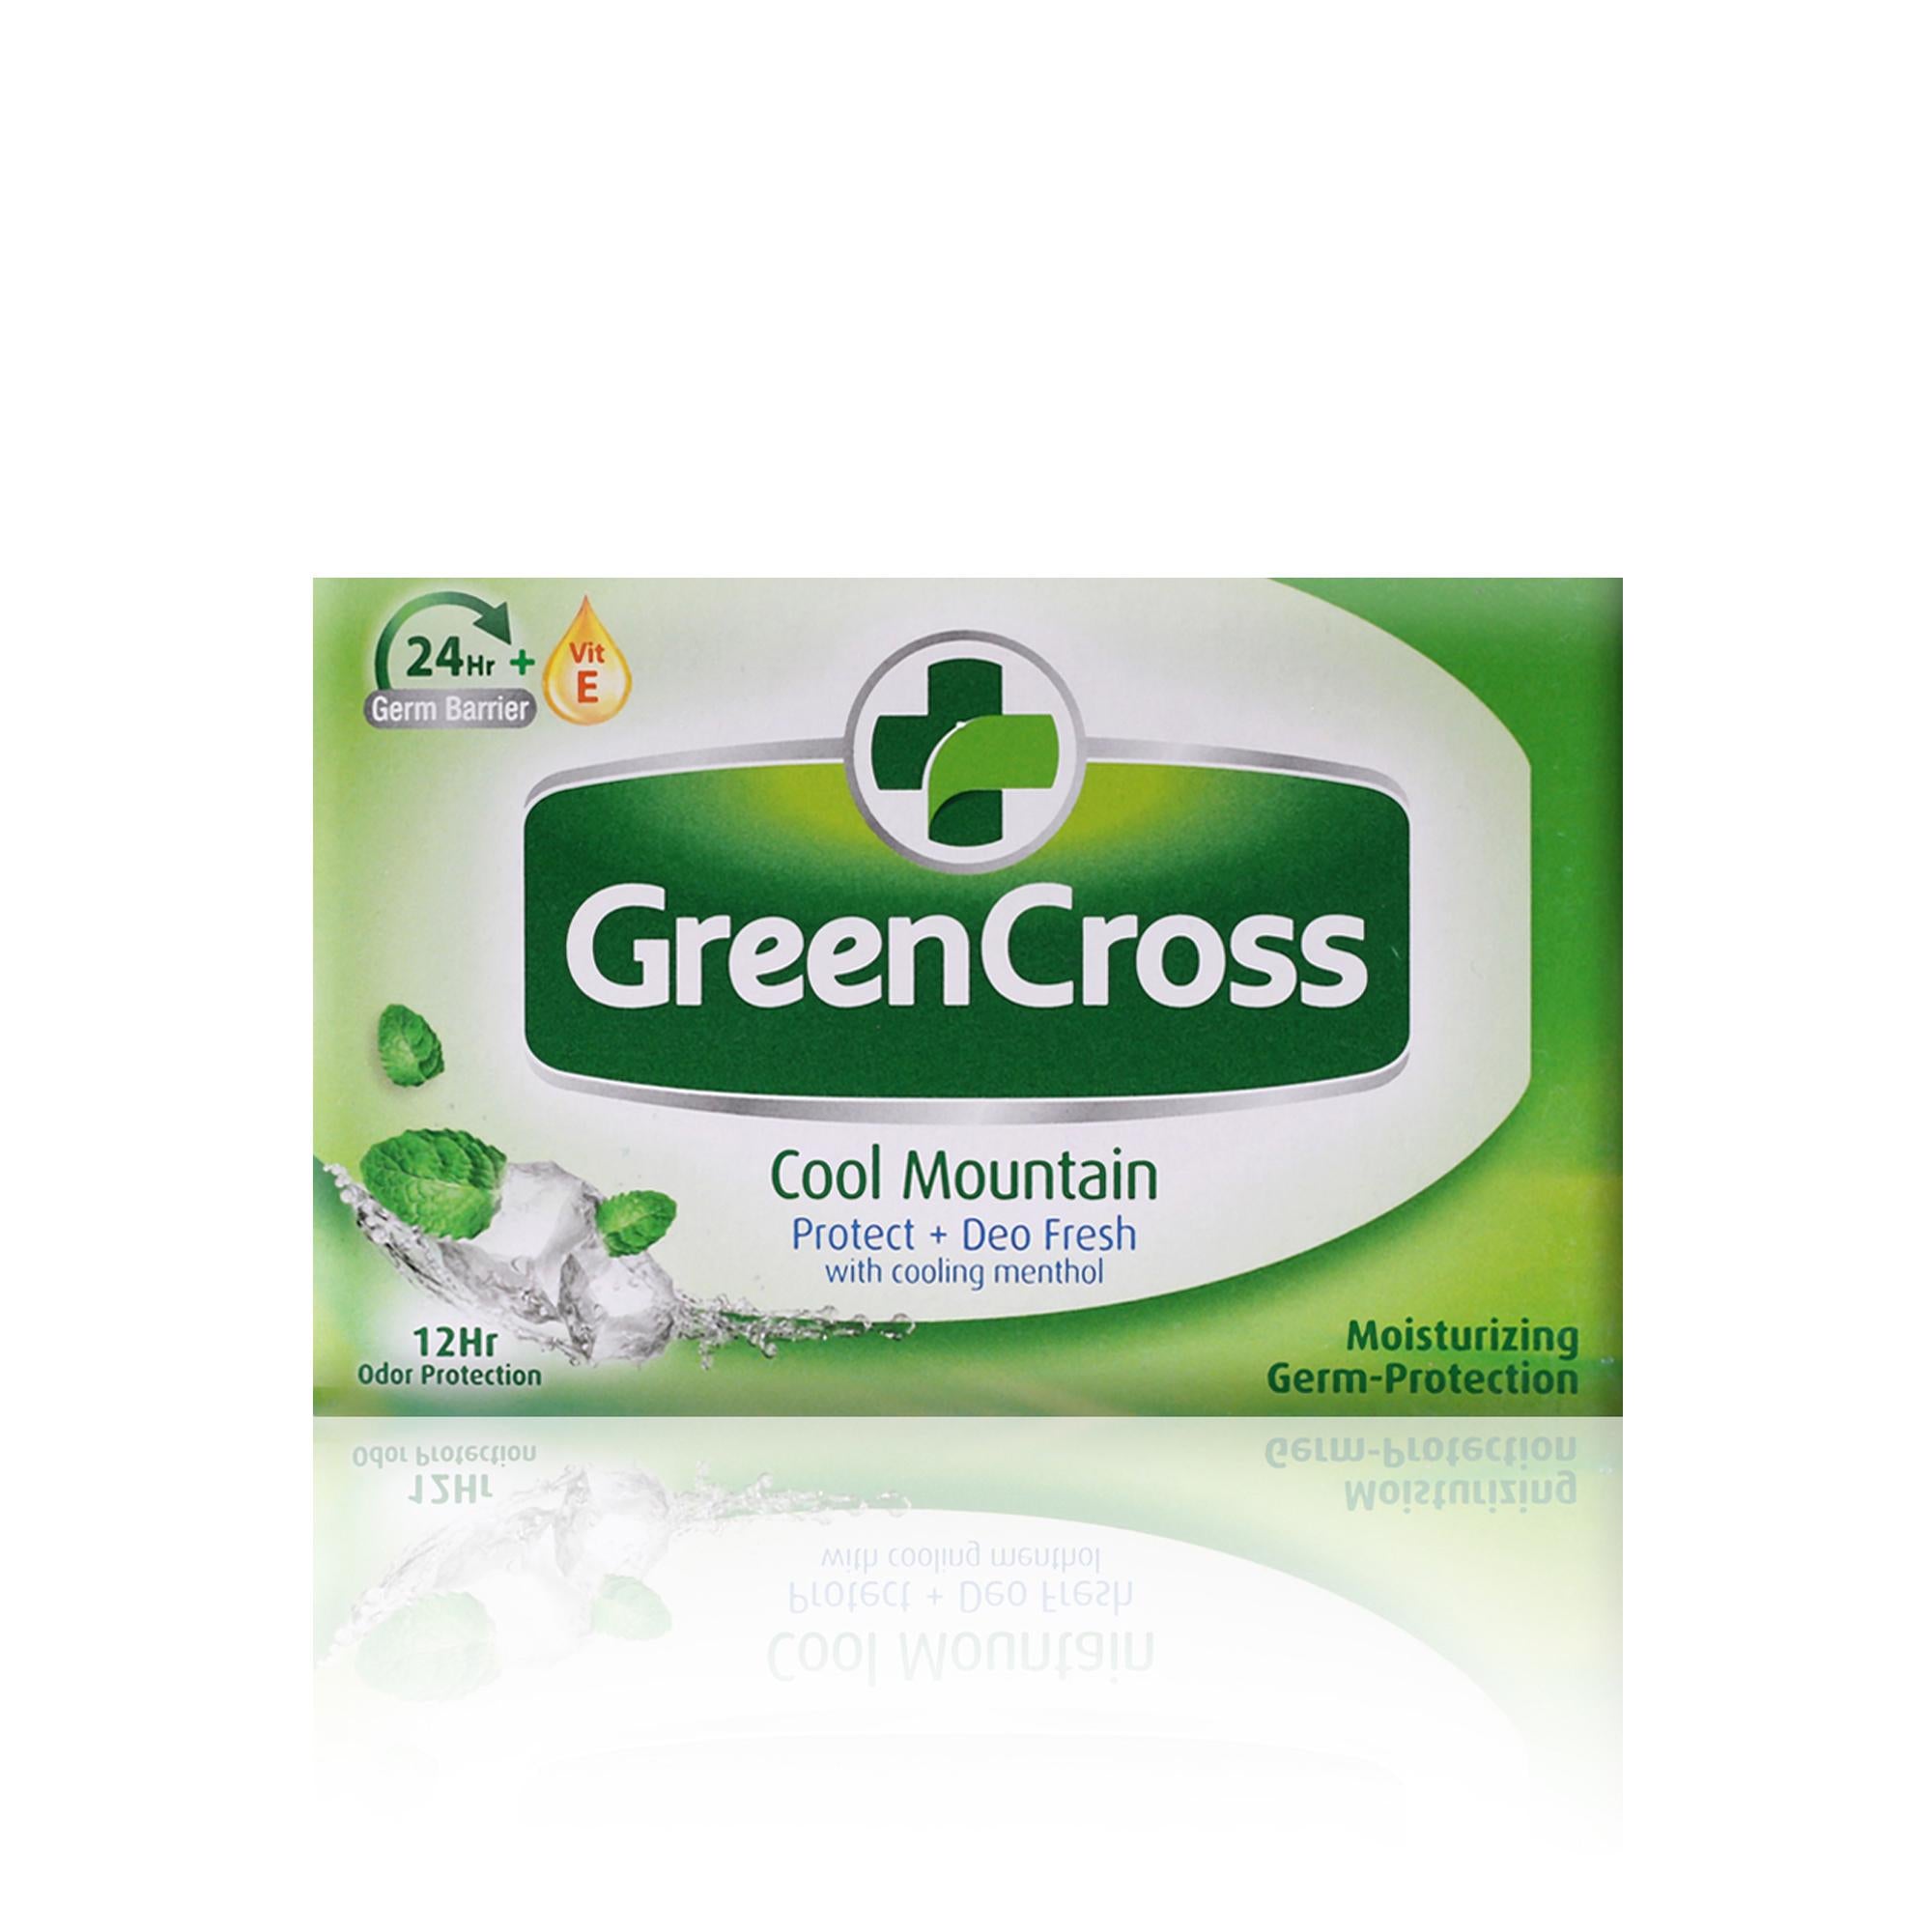 Green Cross Cool Mountain Moist Protection Bar Soap (125g) Set of 3